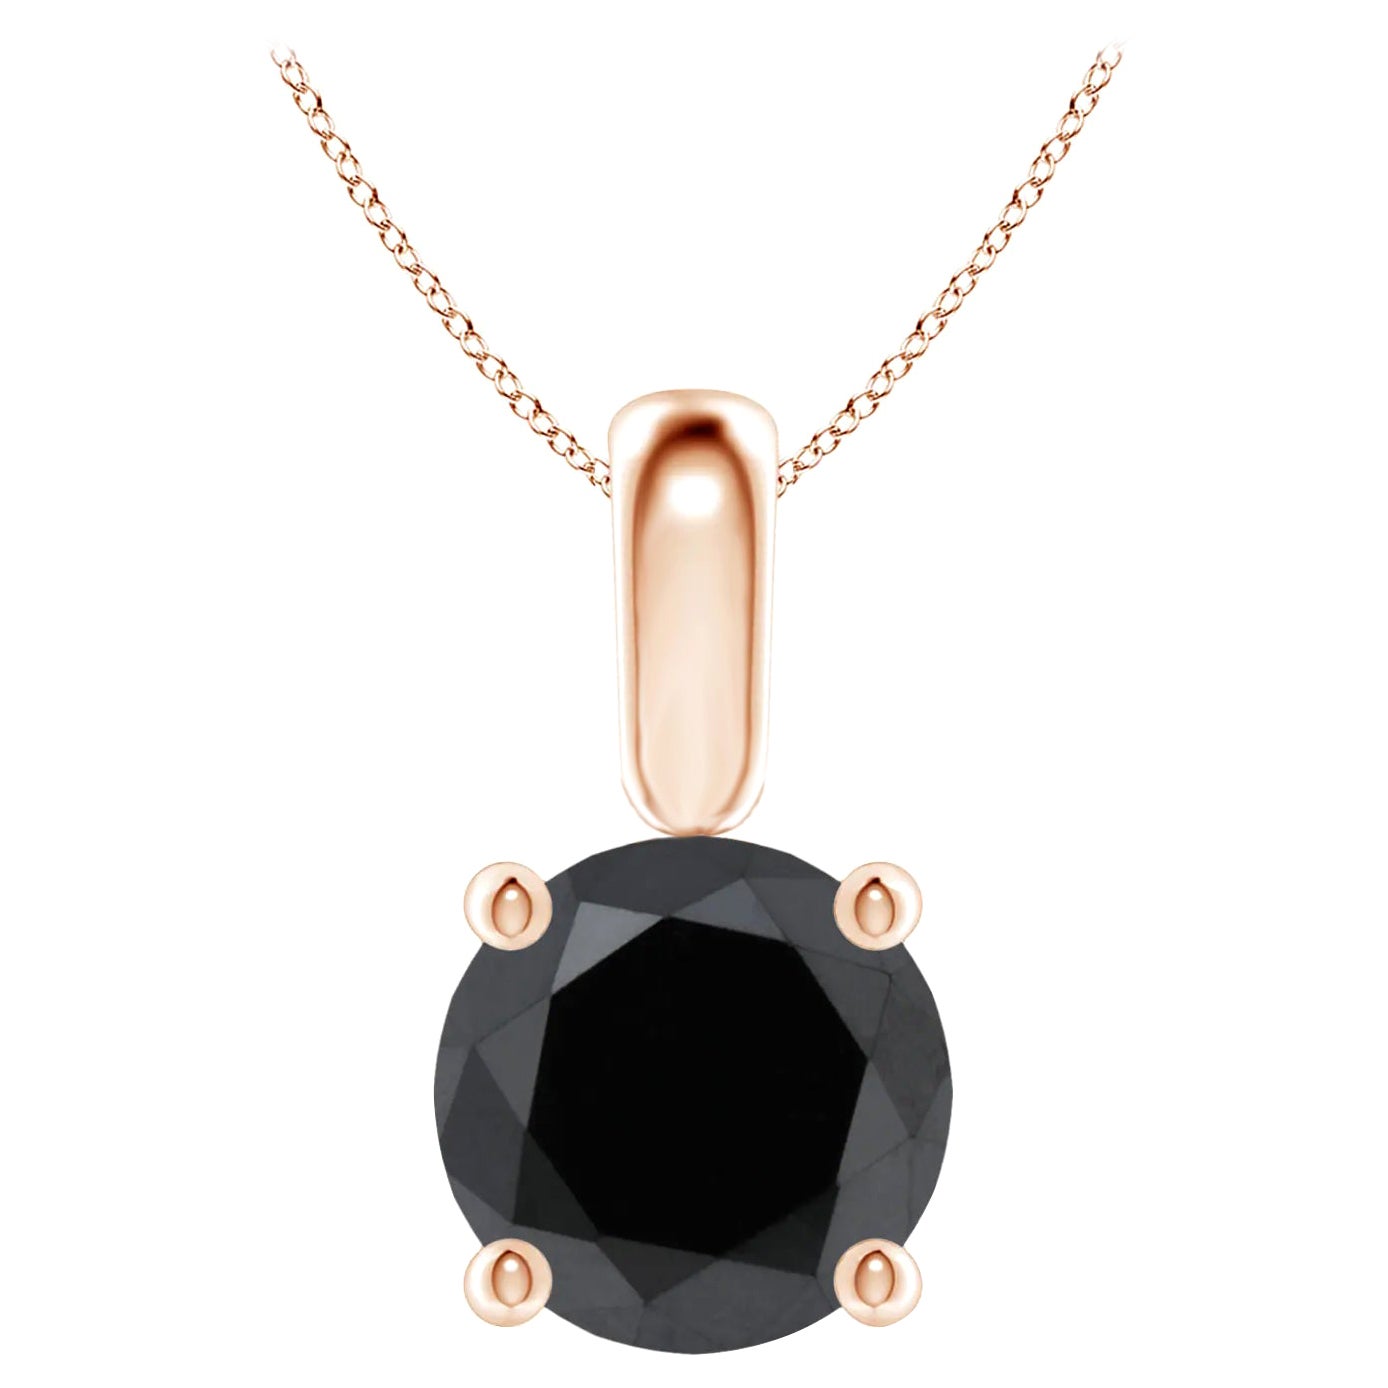 2.28 Carat Round Black Diamond Solitaire Pendant Necklace in 14K Rose Gold